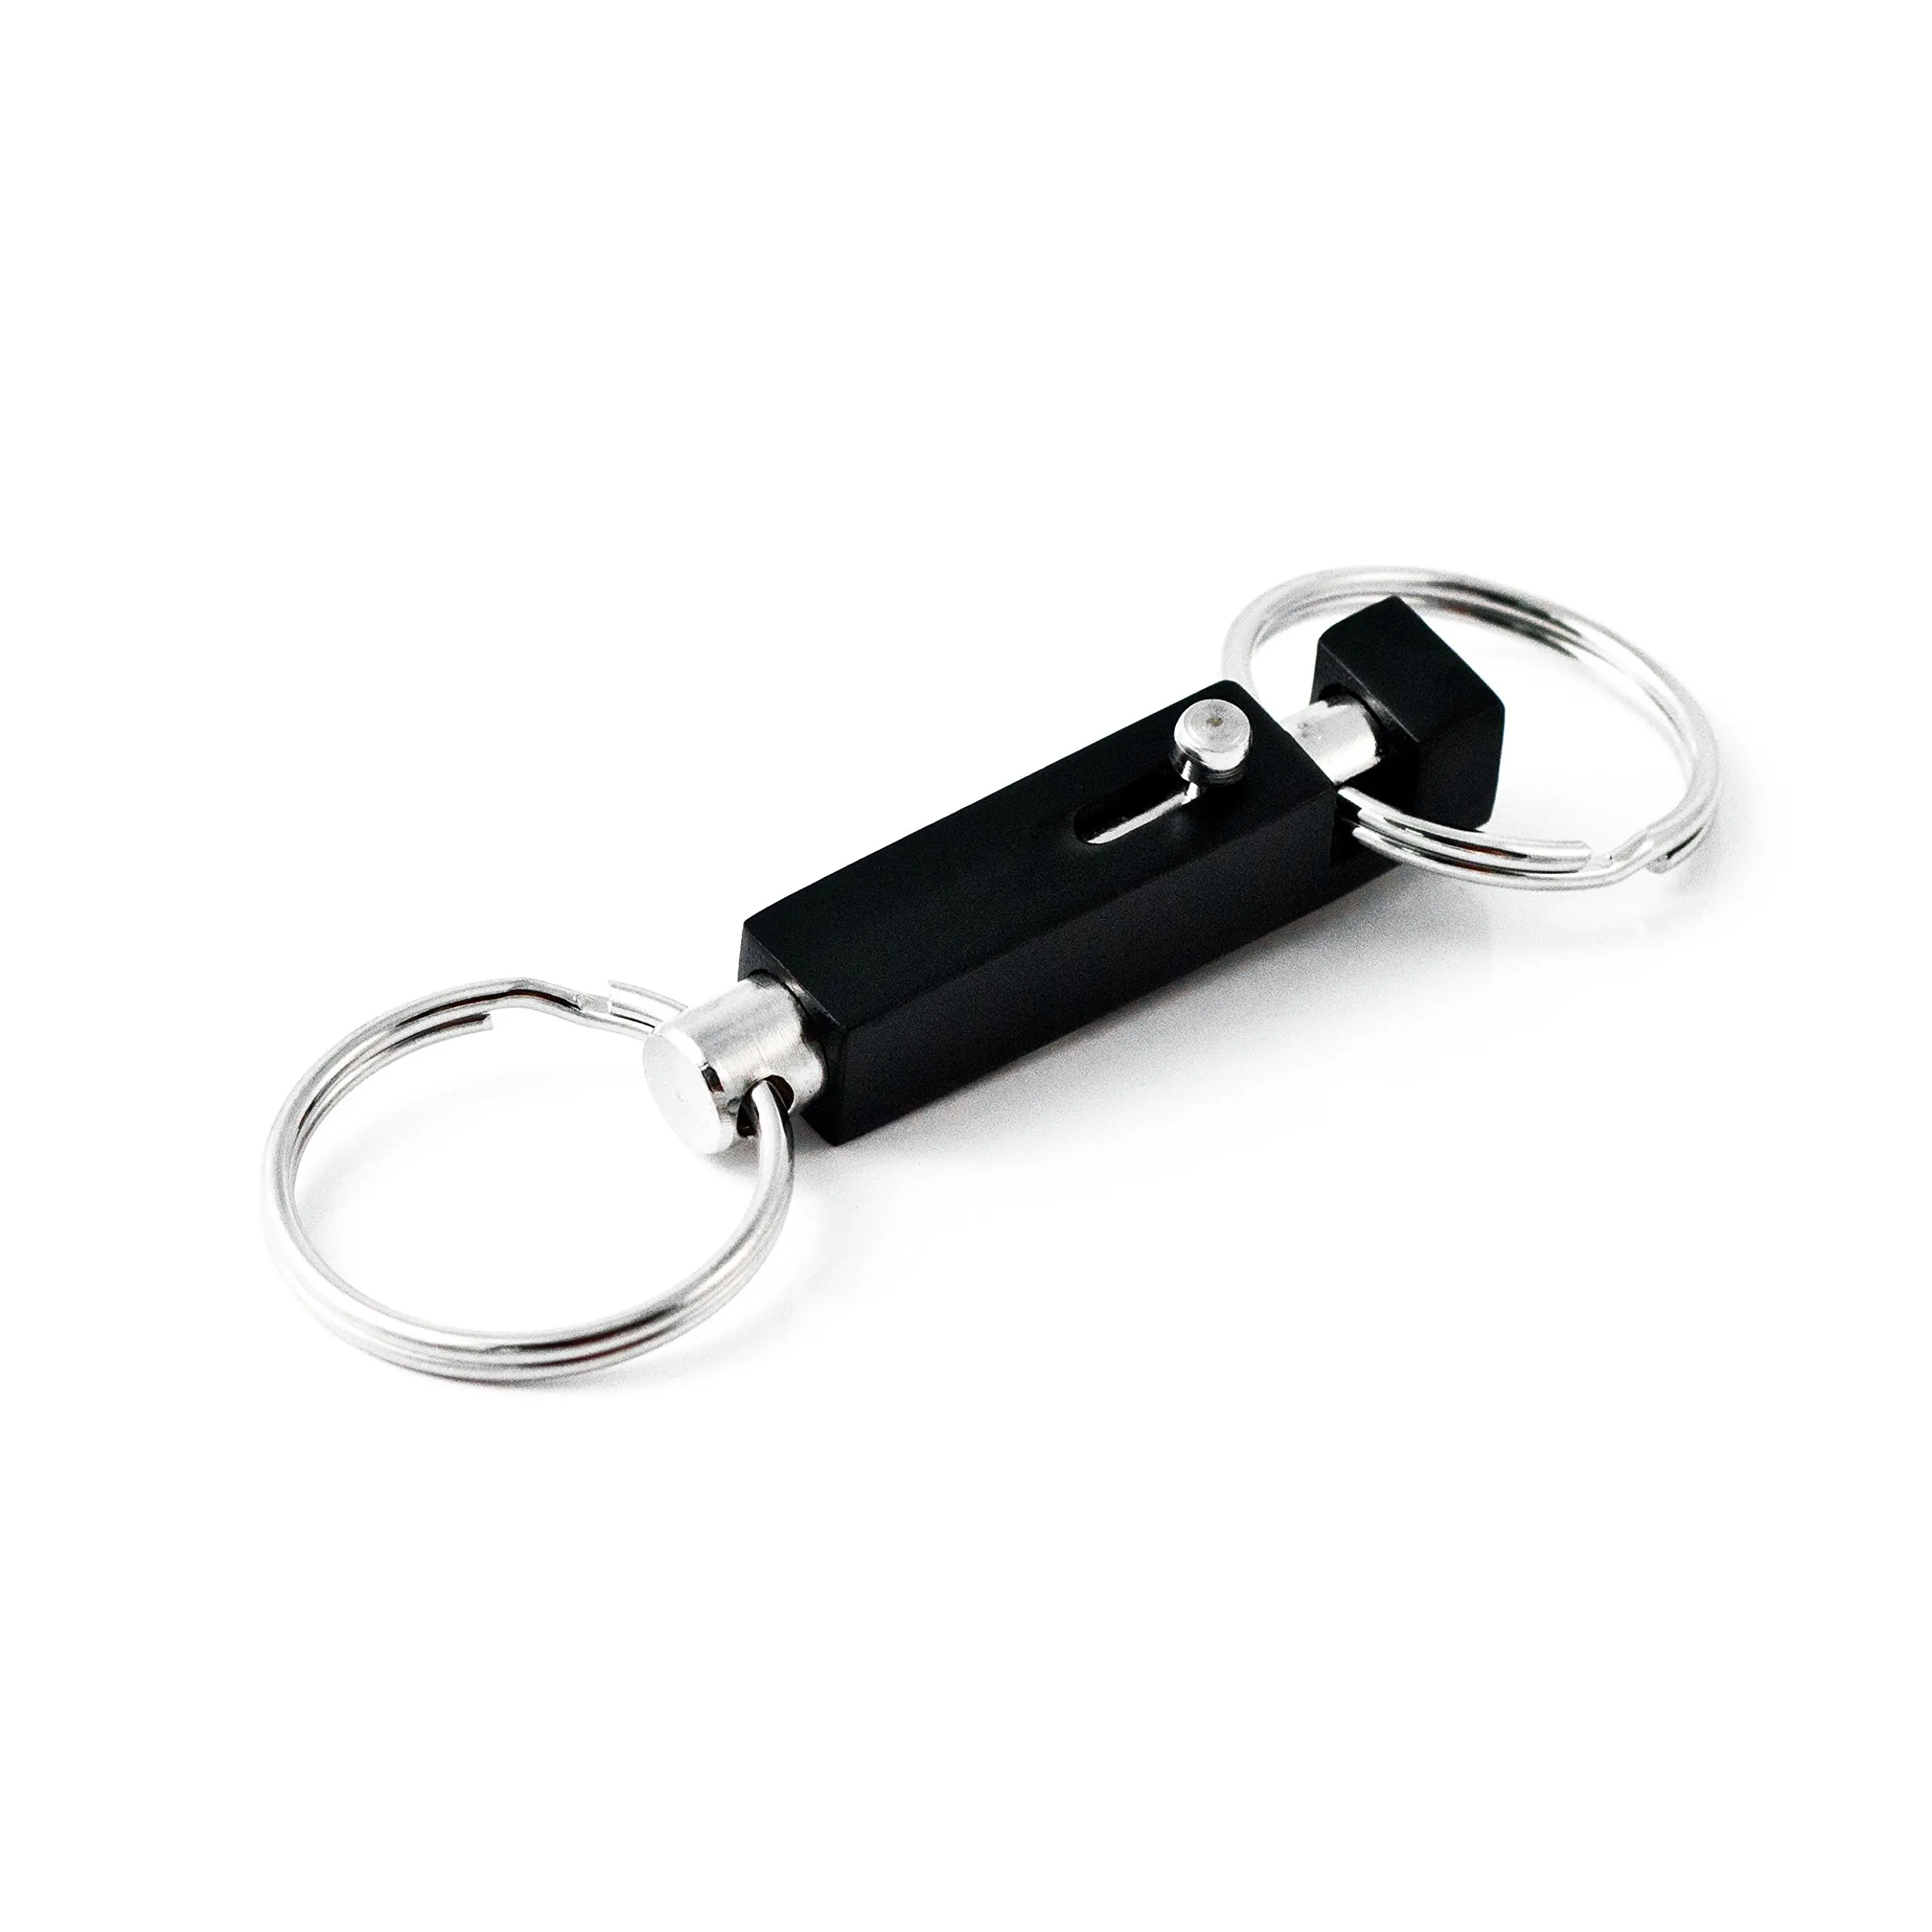 KEY-BAK #500 Premium Quick Release Pull Apart Key Accessory with 2 Split Rings